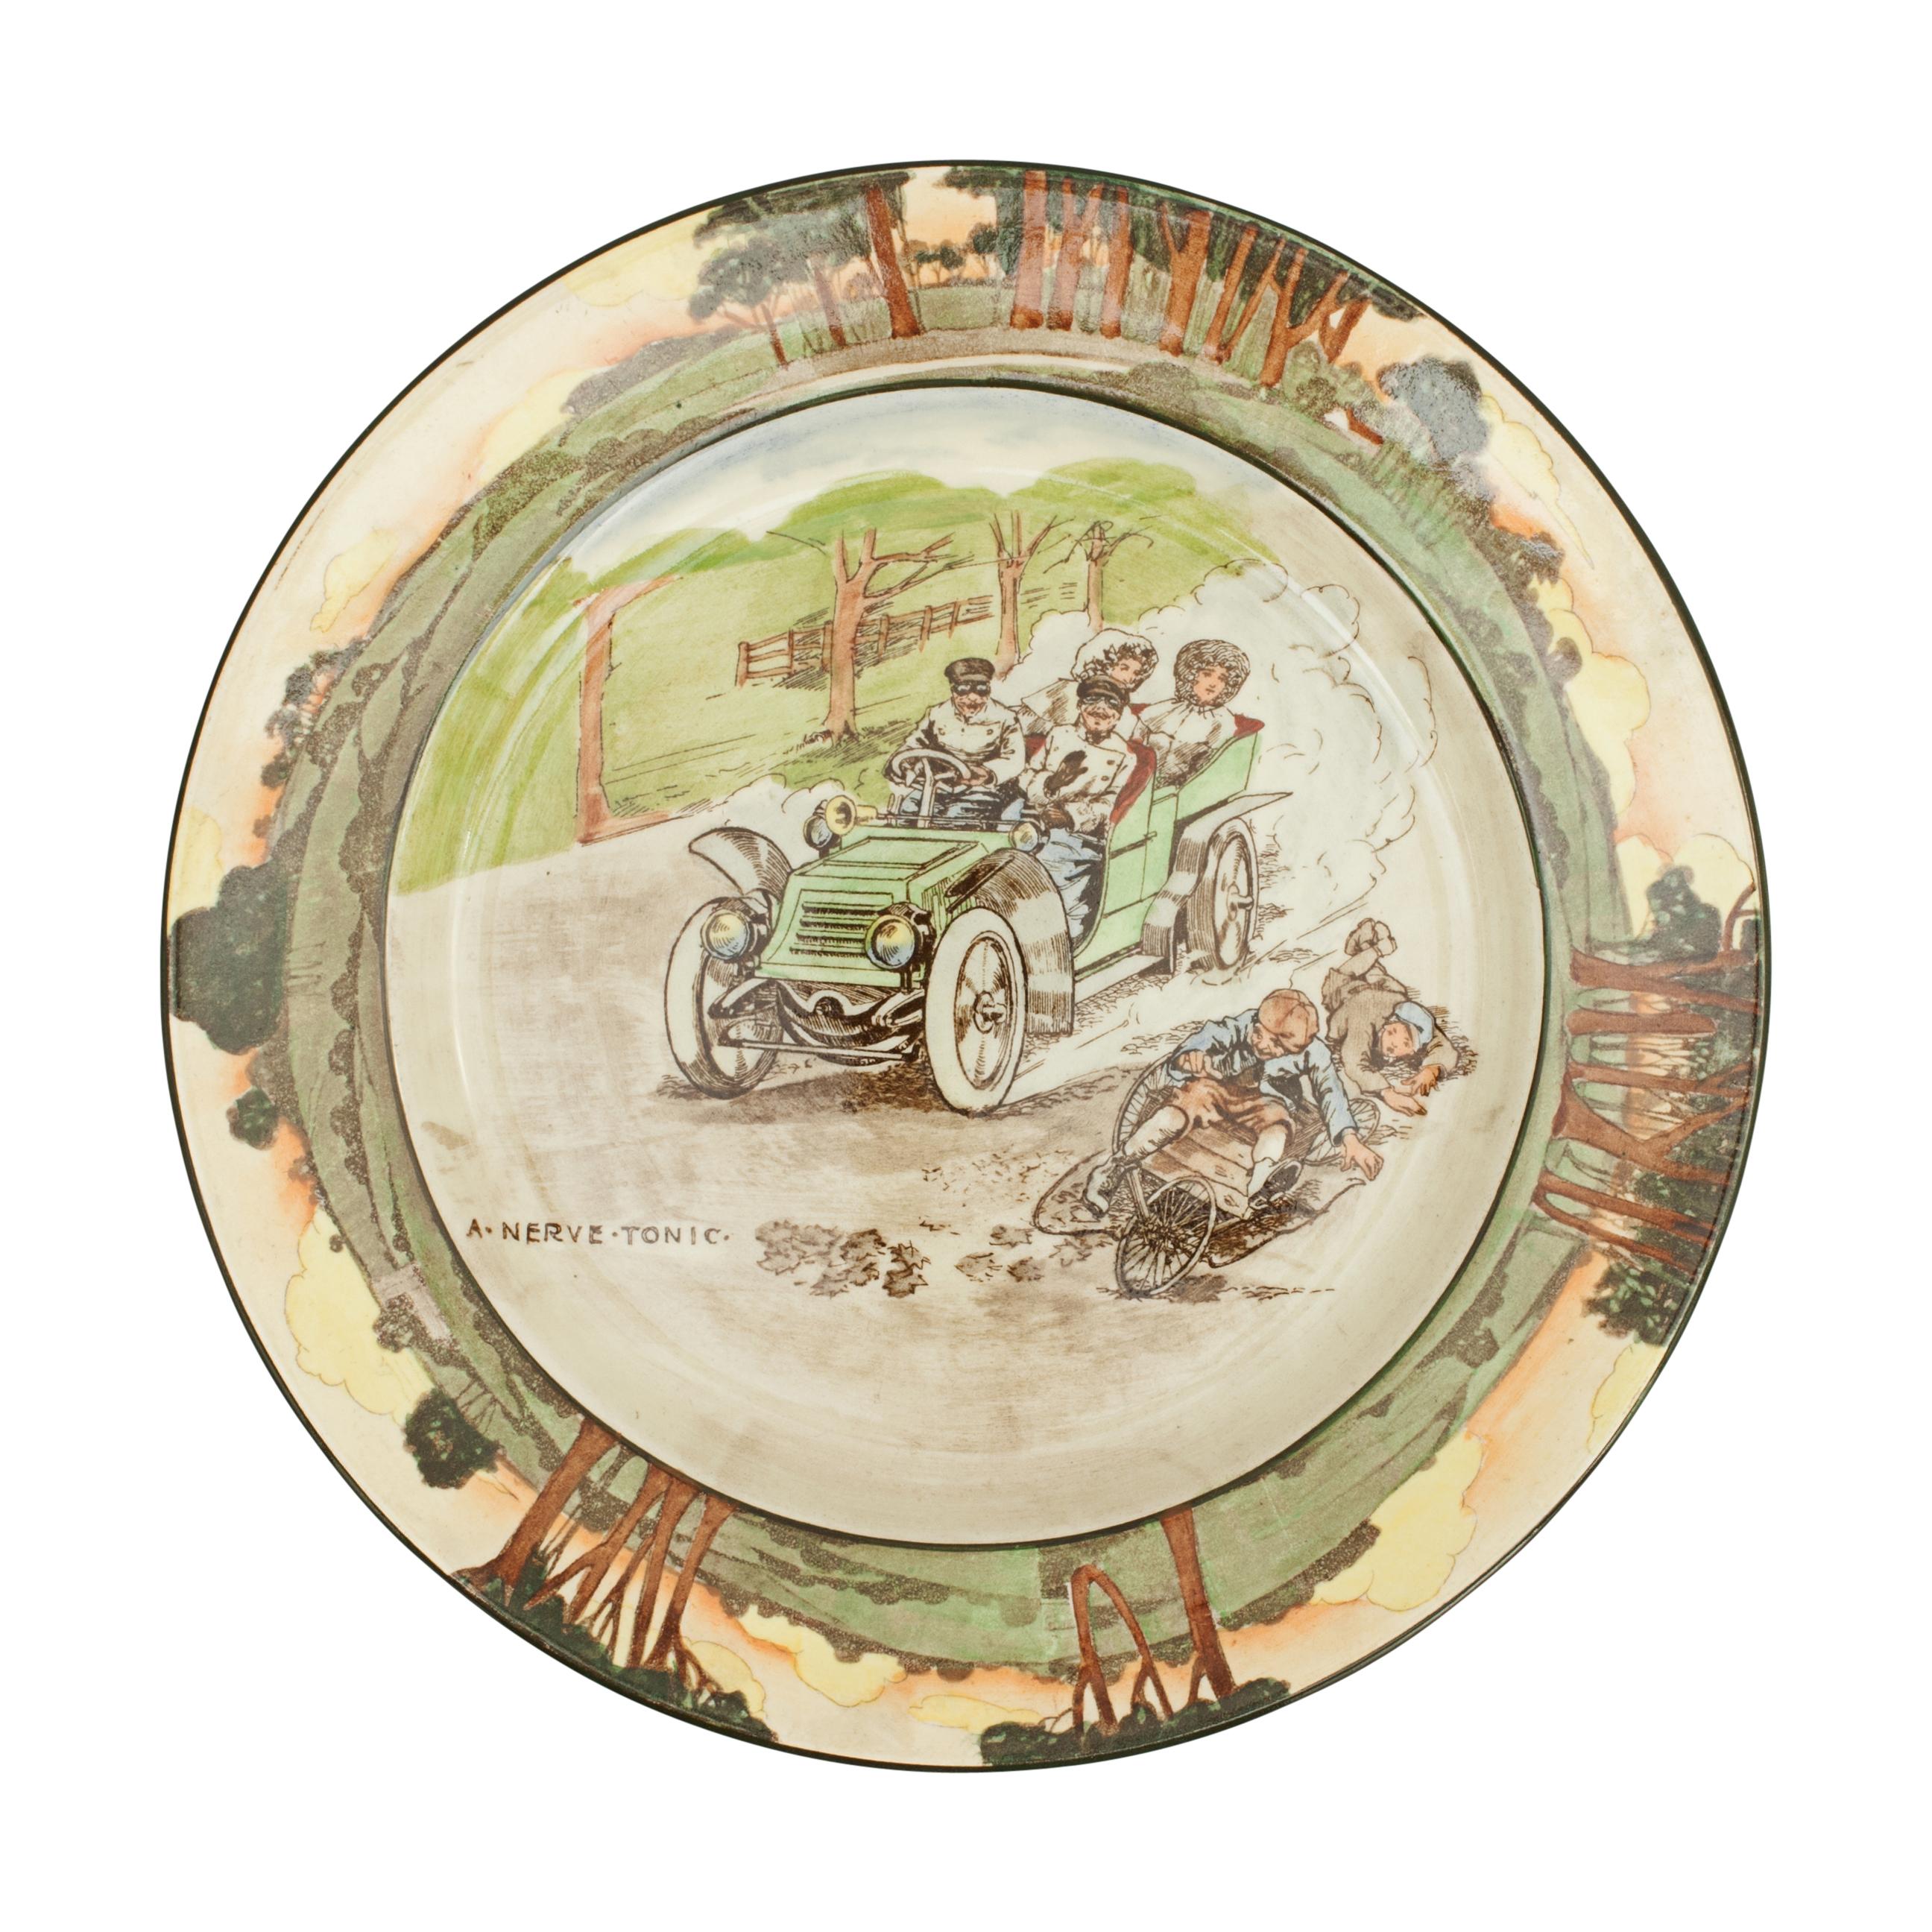 English Vintage Royal Doulton Motoring Plate, A Nerve Tonic